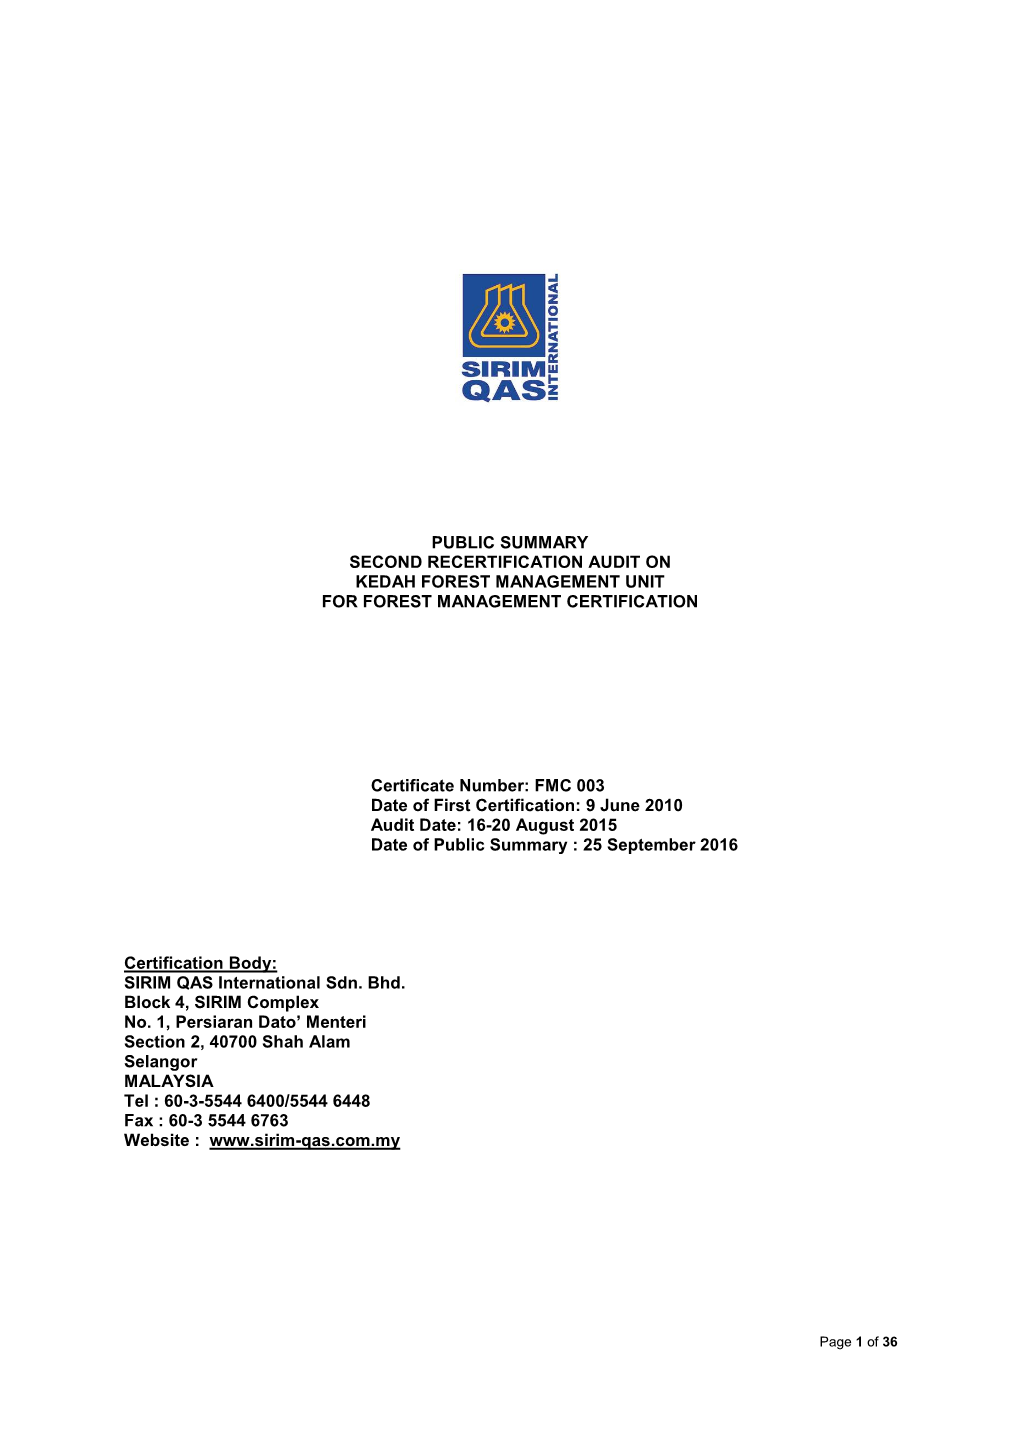 PUBLIC SUMMARY SECOND RECERTIFICATION AUDIT on KEDAH FOREST MANAGEMENT UNIT for FOREST MANAGEMENT CERTIFICATION Certificate Numb